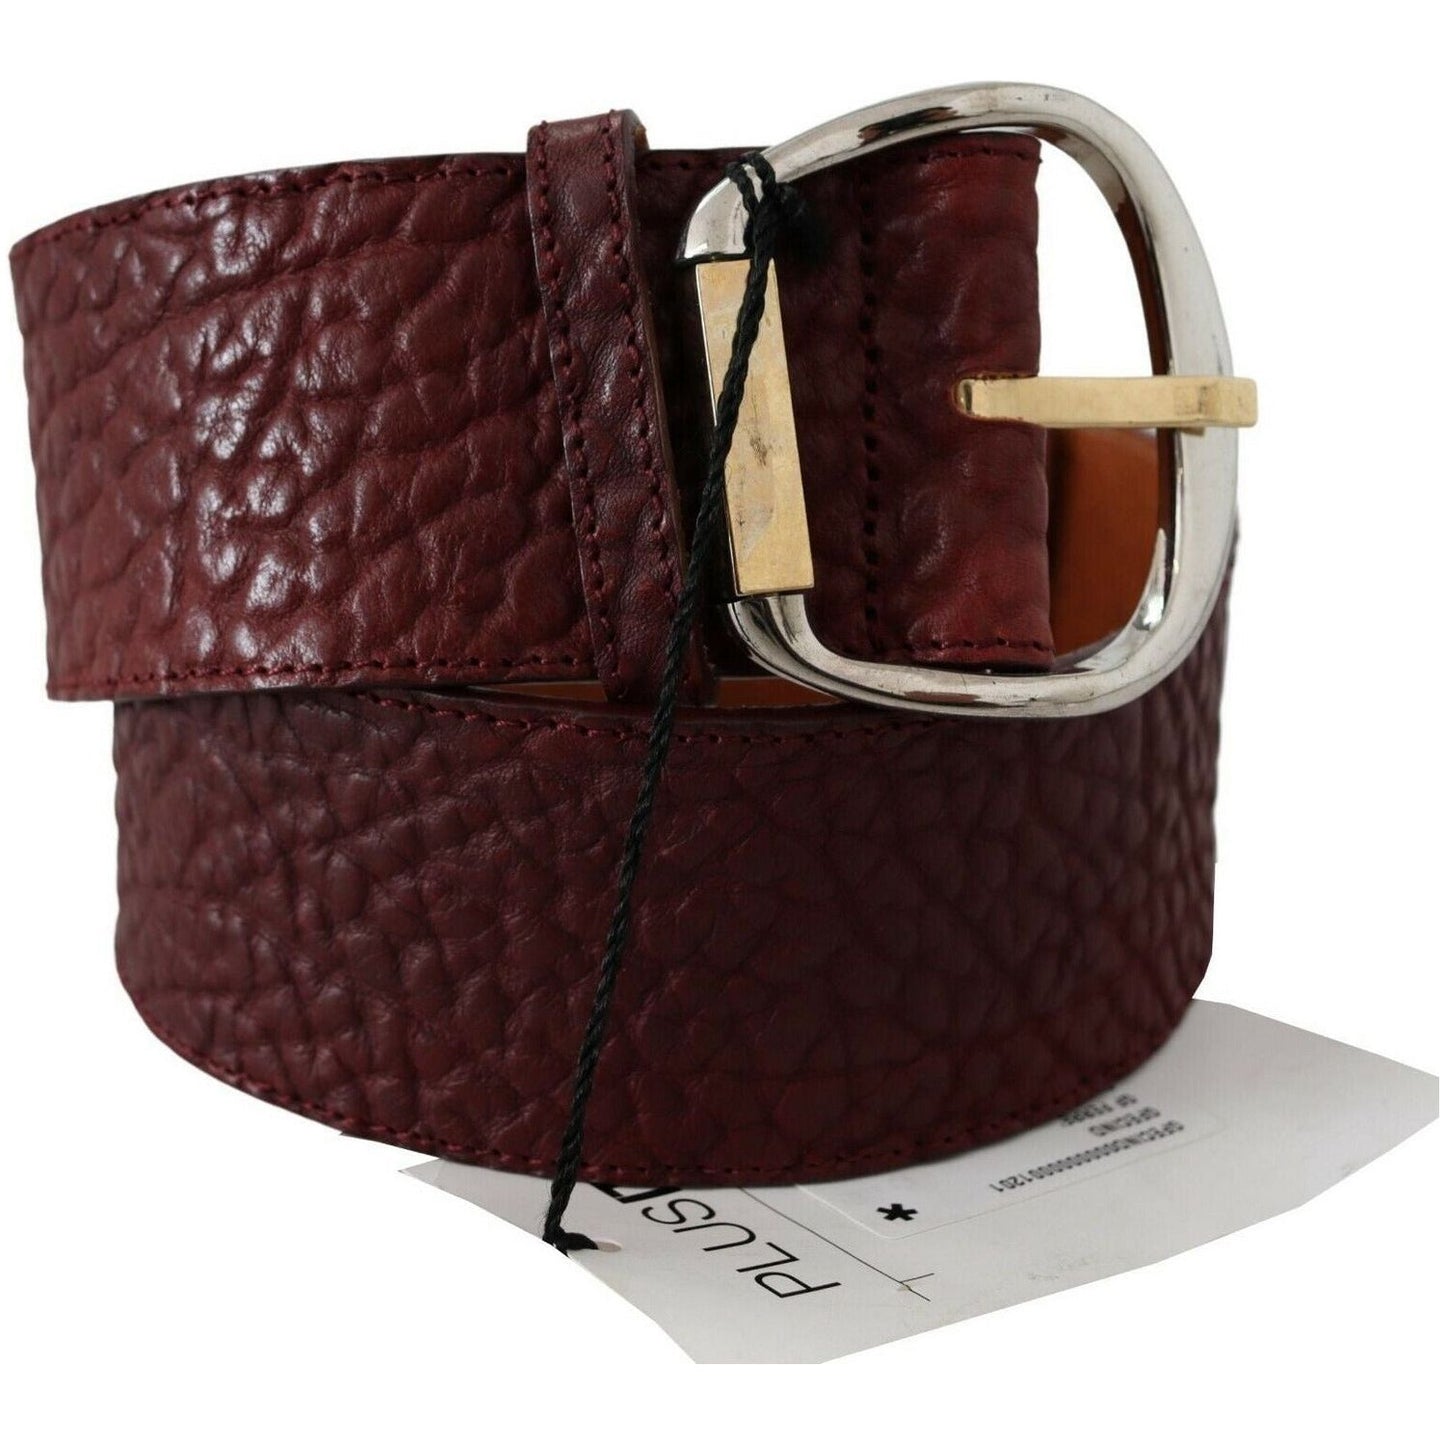 GF Ferre Elegant Brown Leather Fashion Belt bordeaux-wide-leather-waist-gold-silver-belt